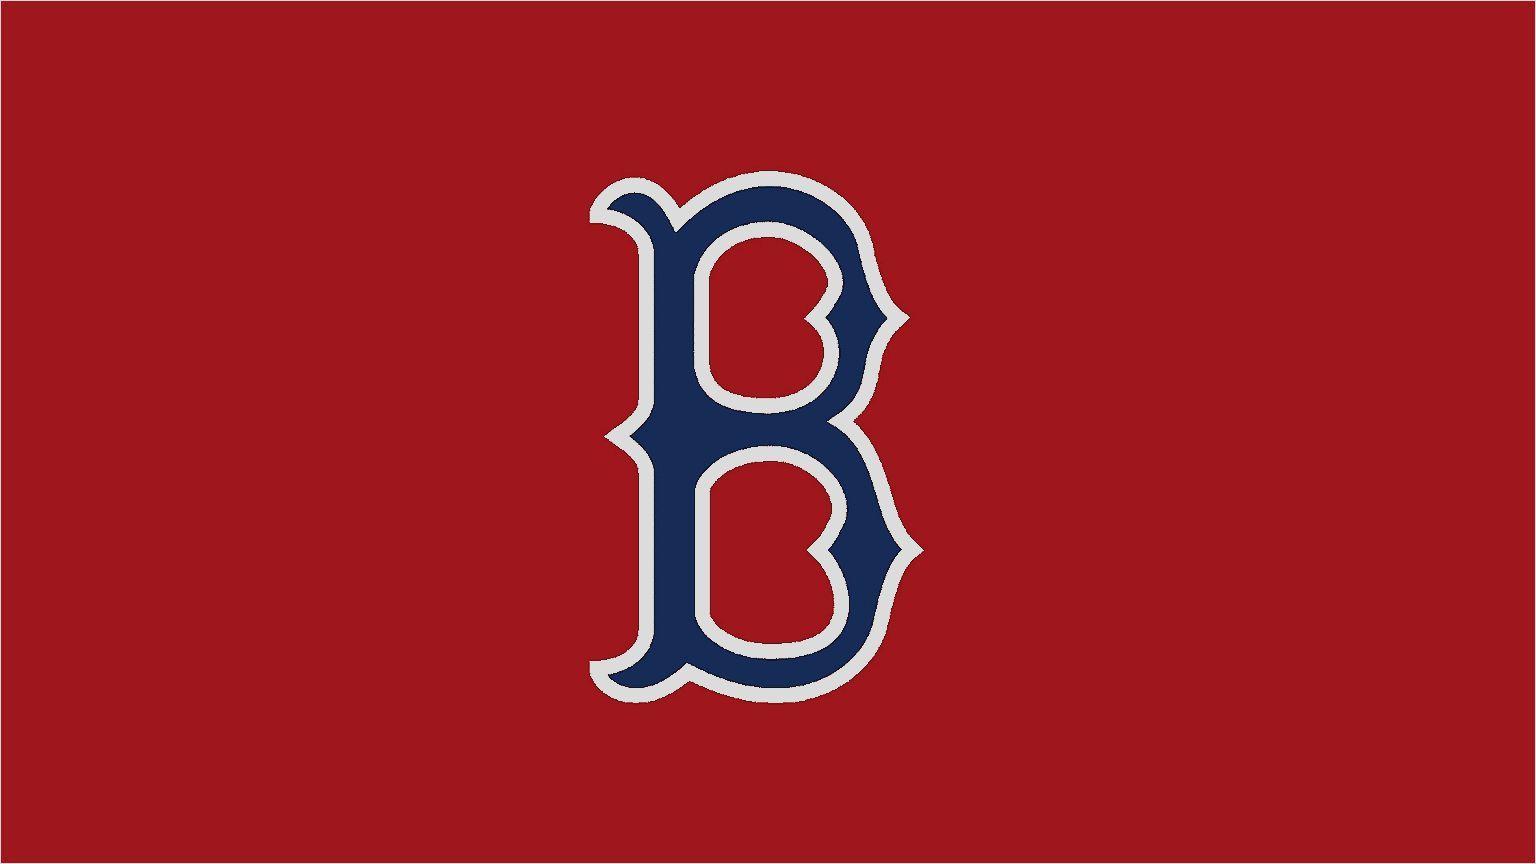 Boston Sports Wallpapers - Top Free Boston Sports Backgrounds ...